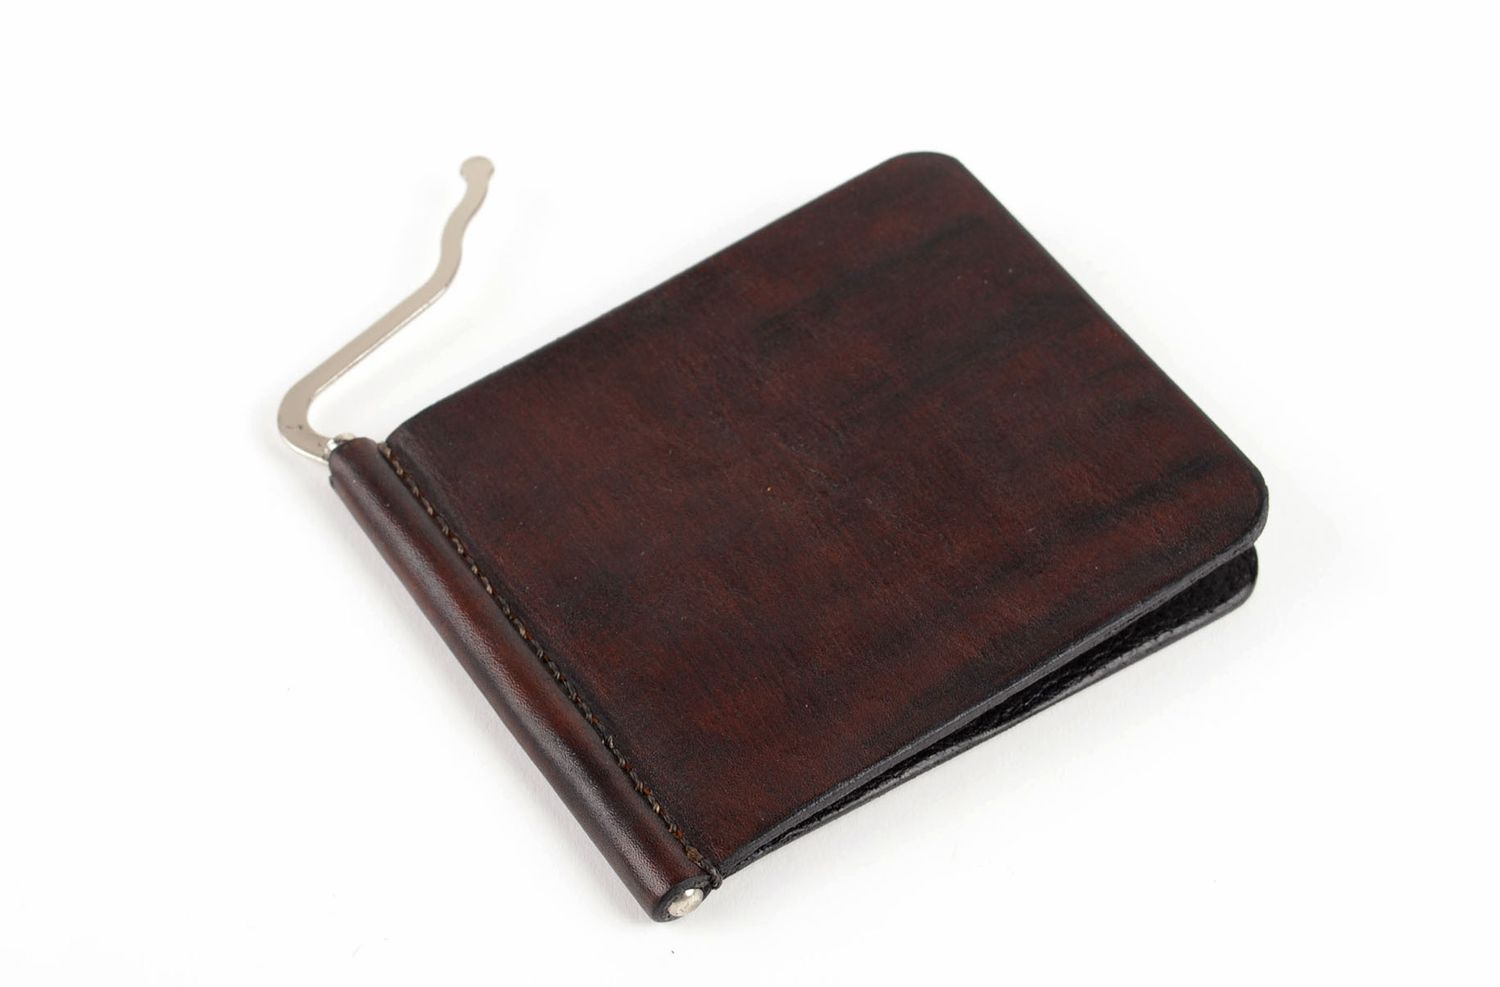 Ostrich skin Passport holder - a beautiful, convenient accessory